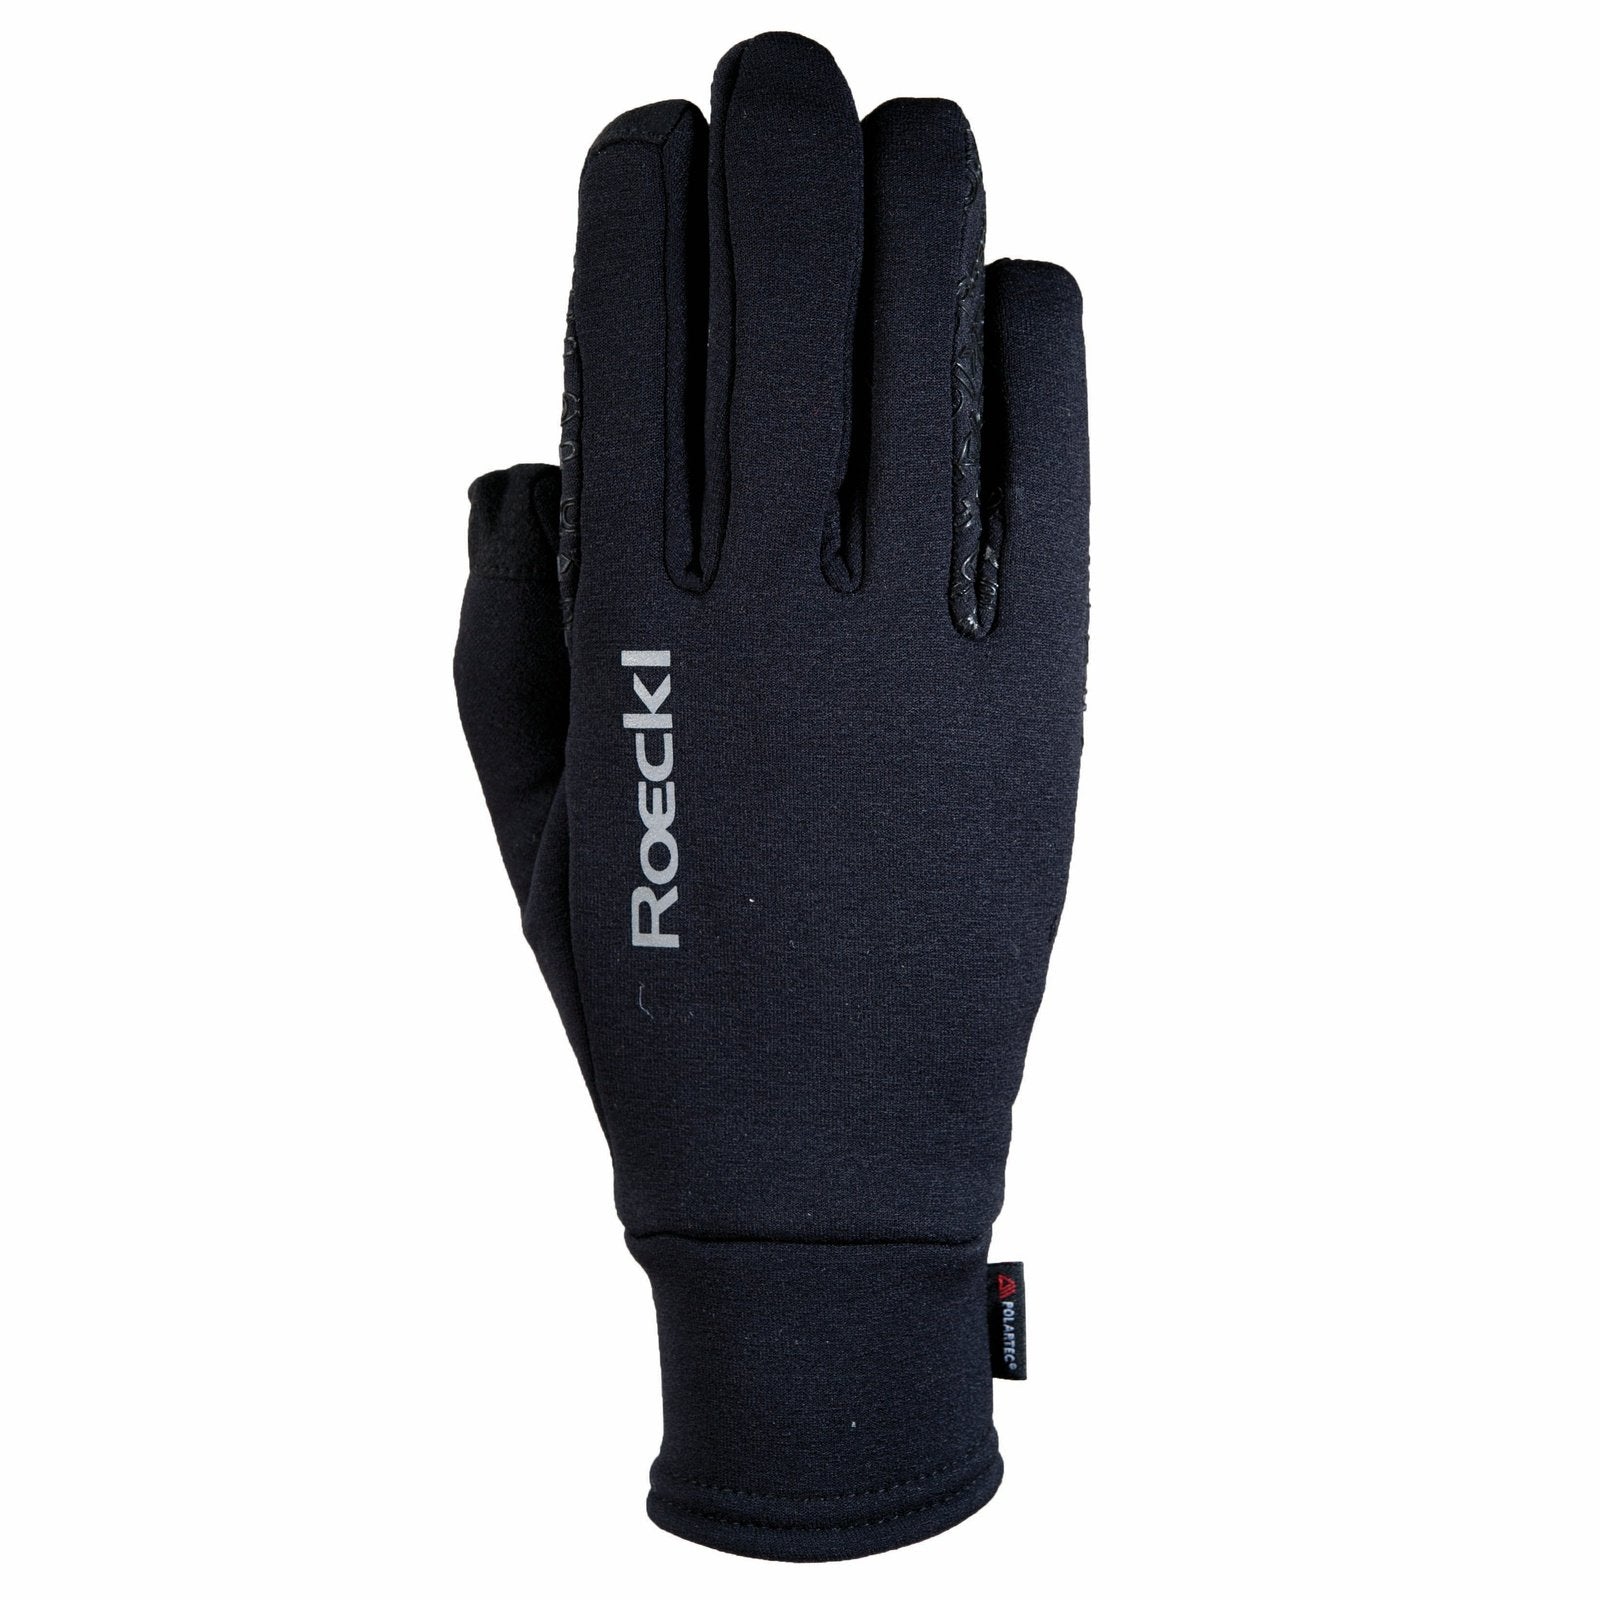 Roeckl Handschuhe Weldon bei SP-Reitsport